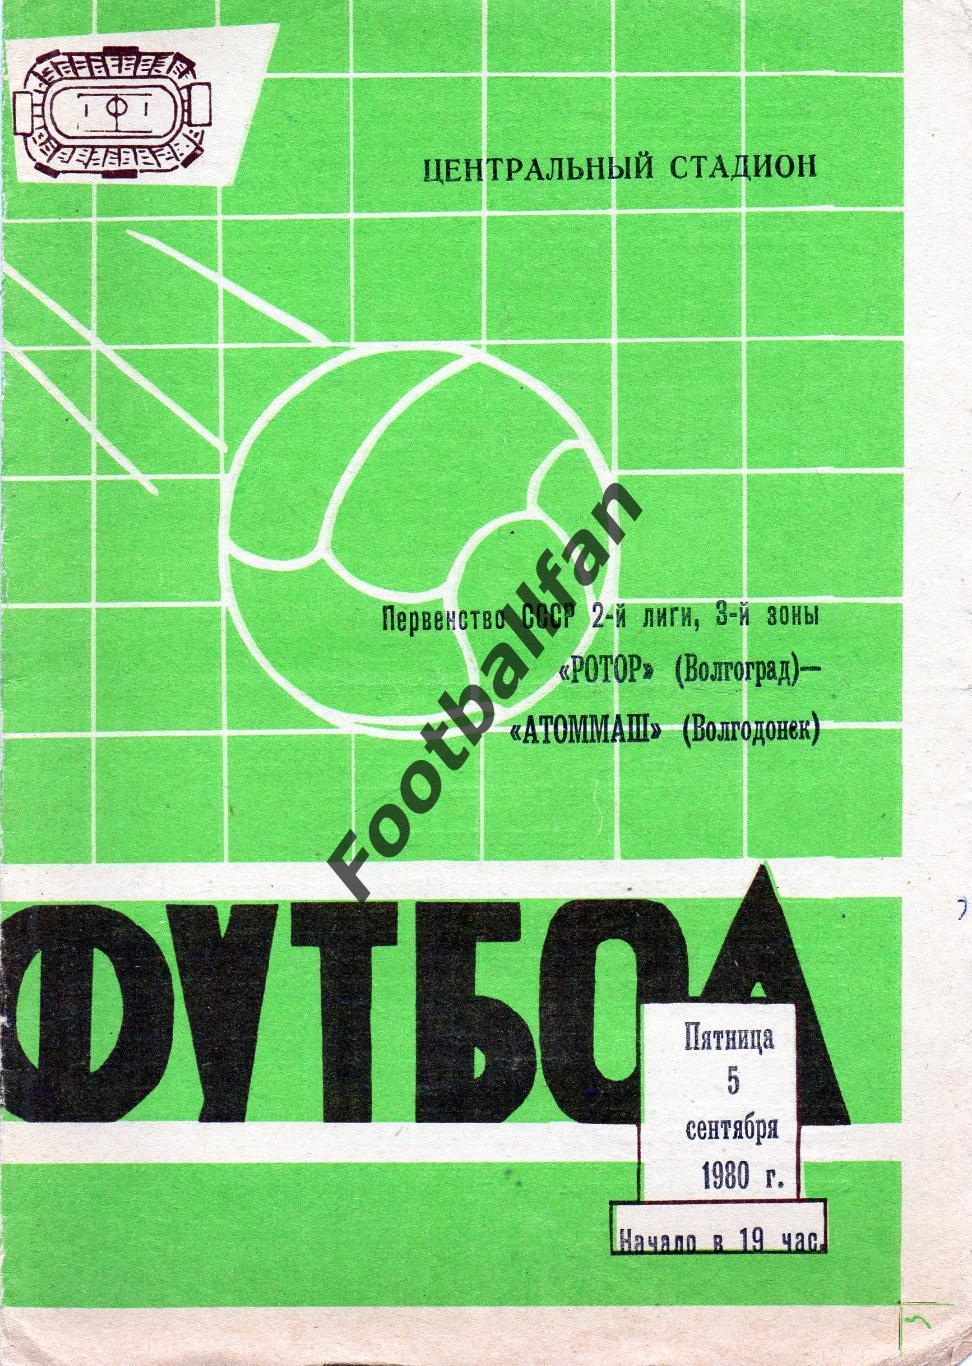 Ротор Волгоград - Атоммаш Волгодонск 05.09.1980